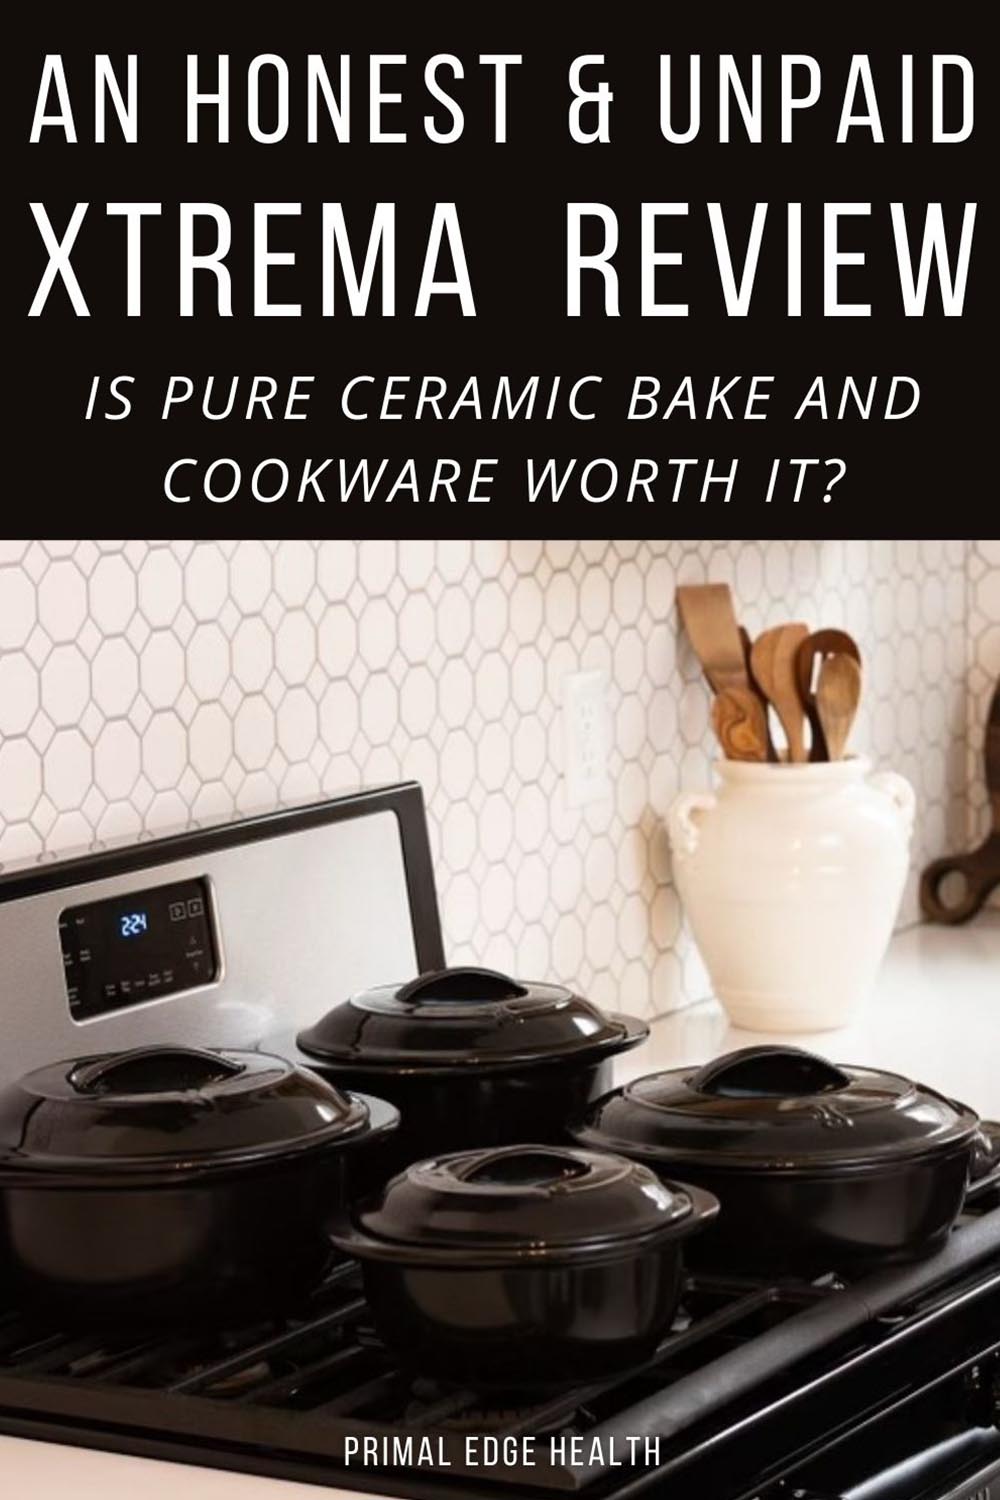 Xtrema Ceramic Cookware